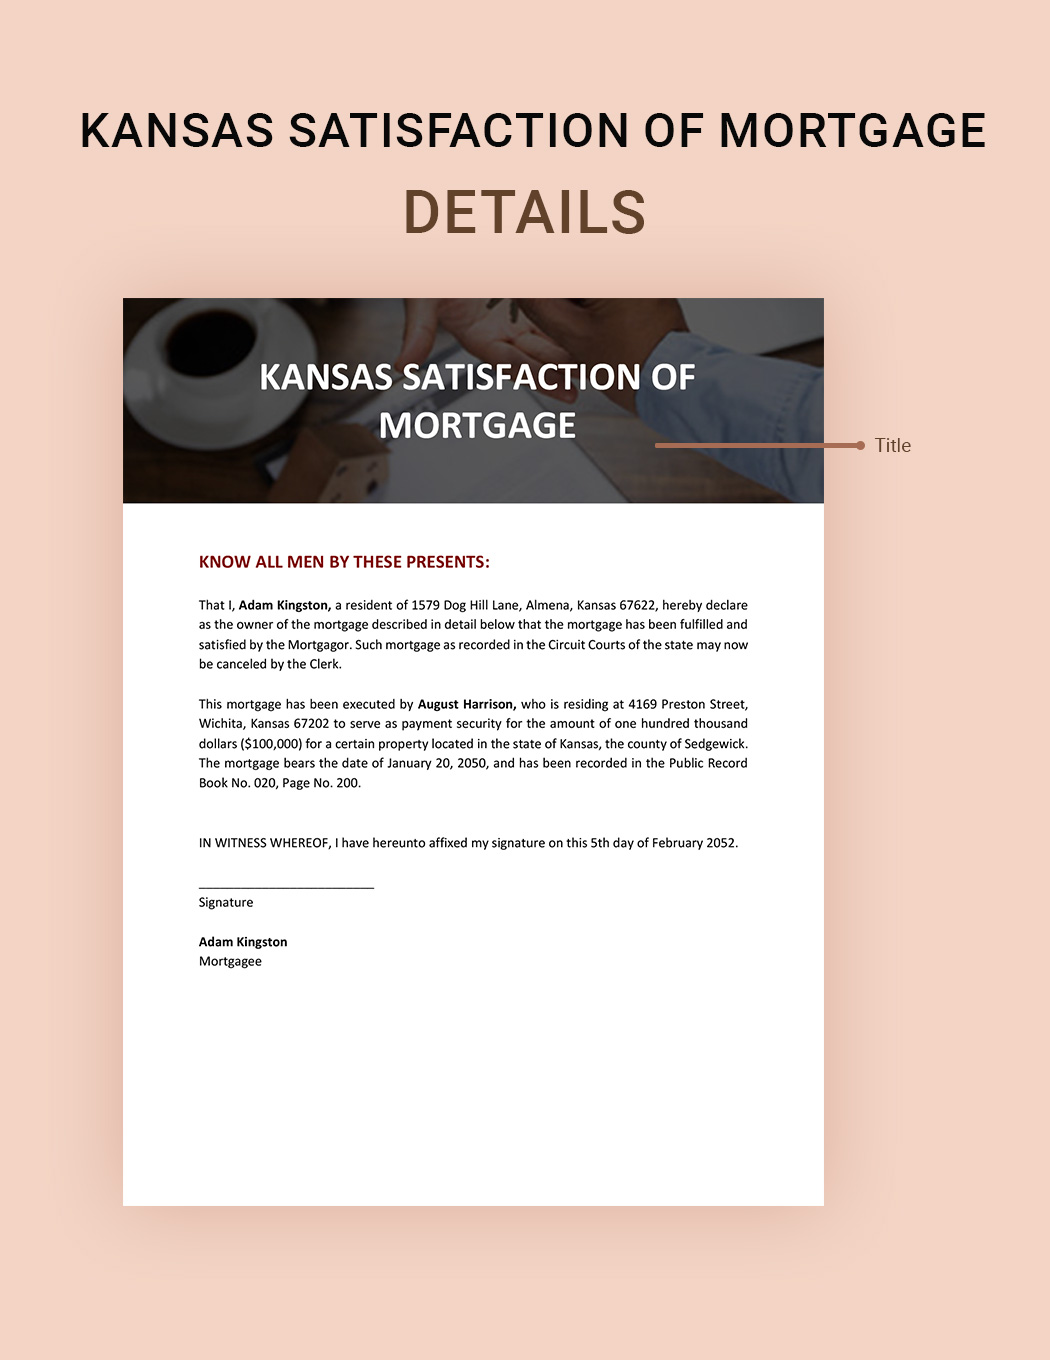 Kansas Satisfaction of Mortgage Template